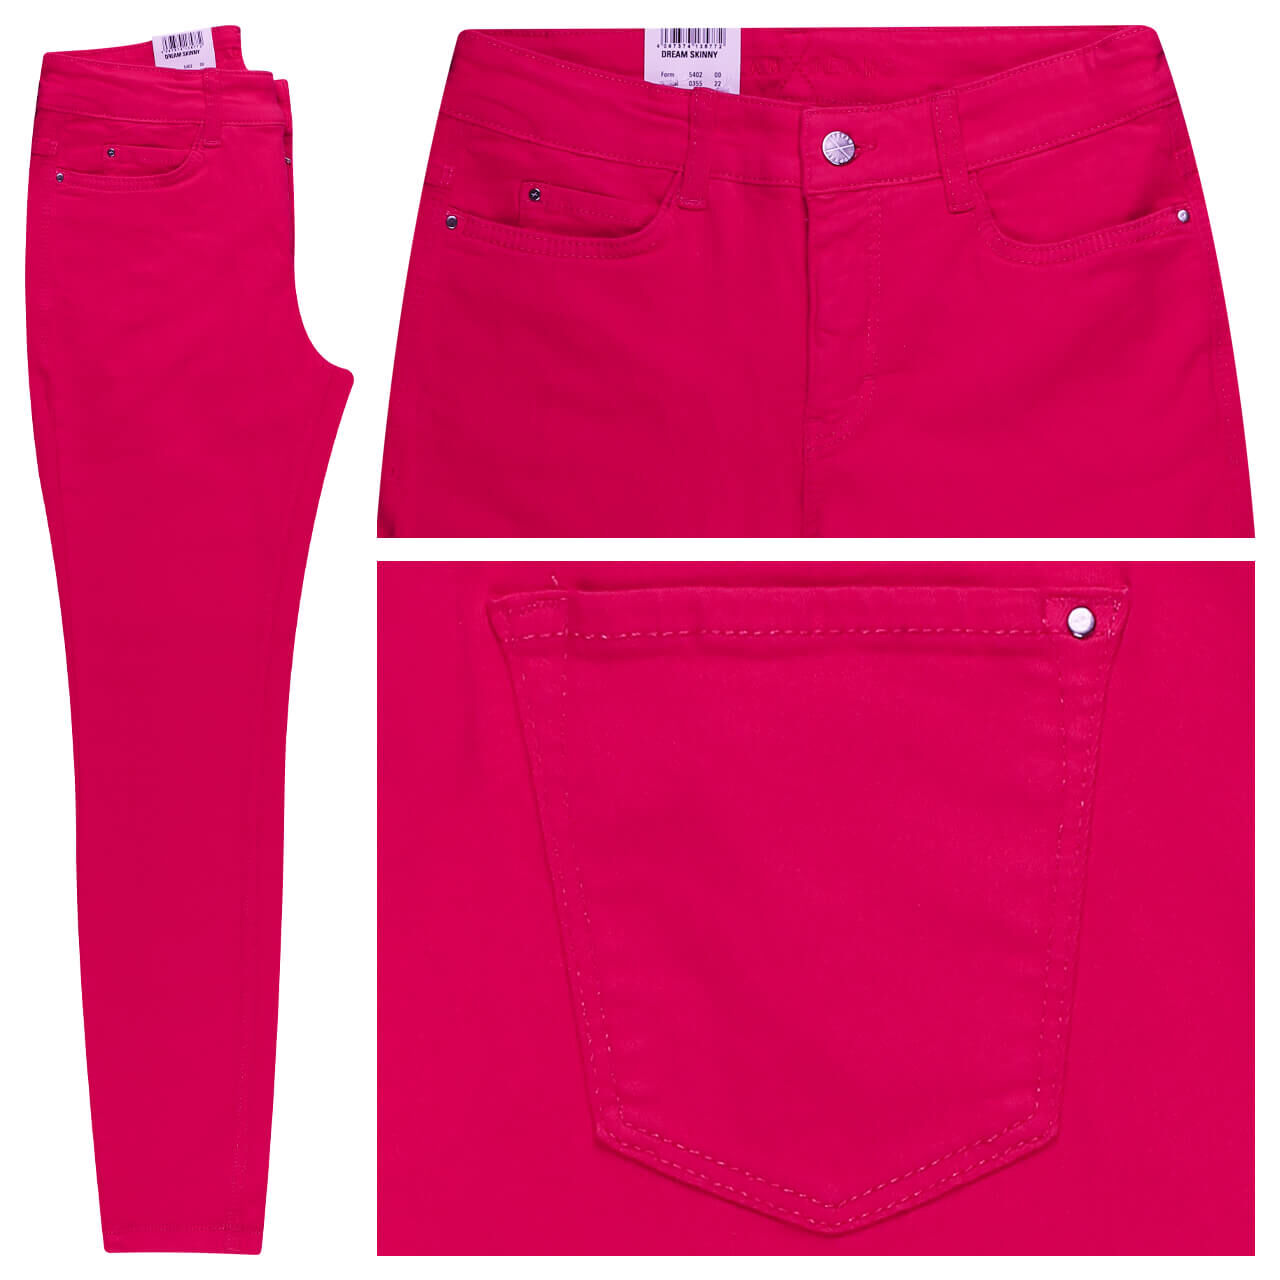 MAC Dream Skinny Jeans pink pitaya